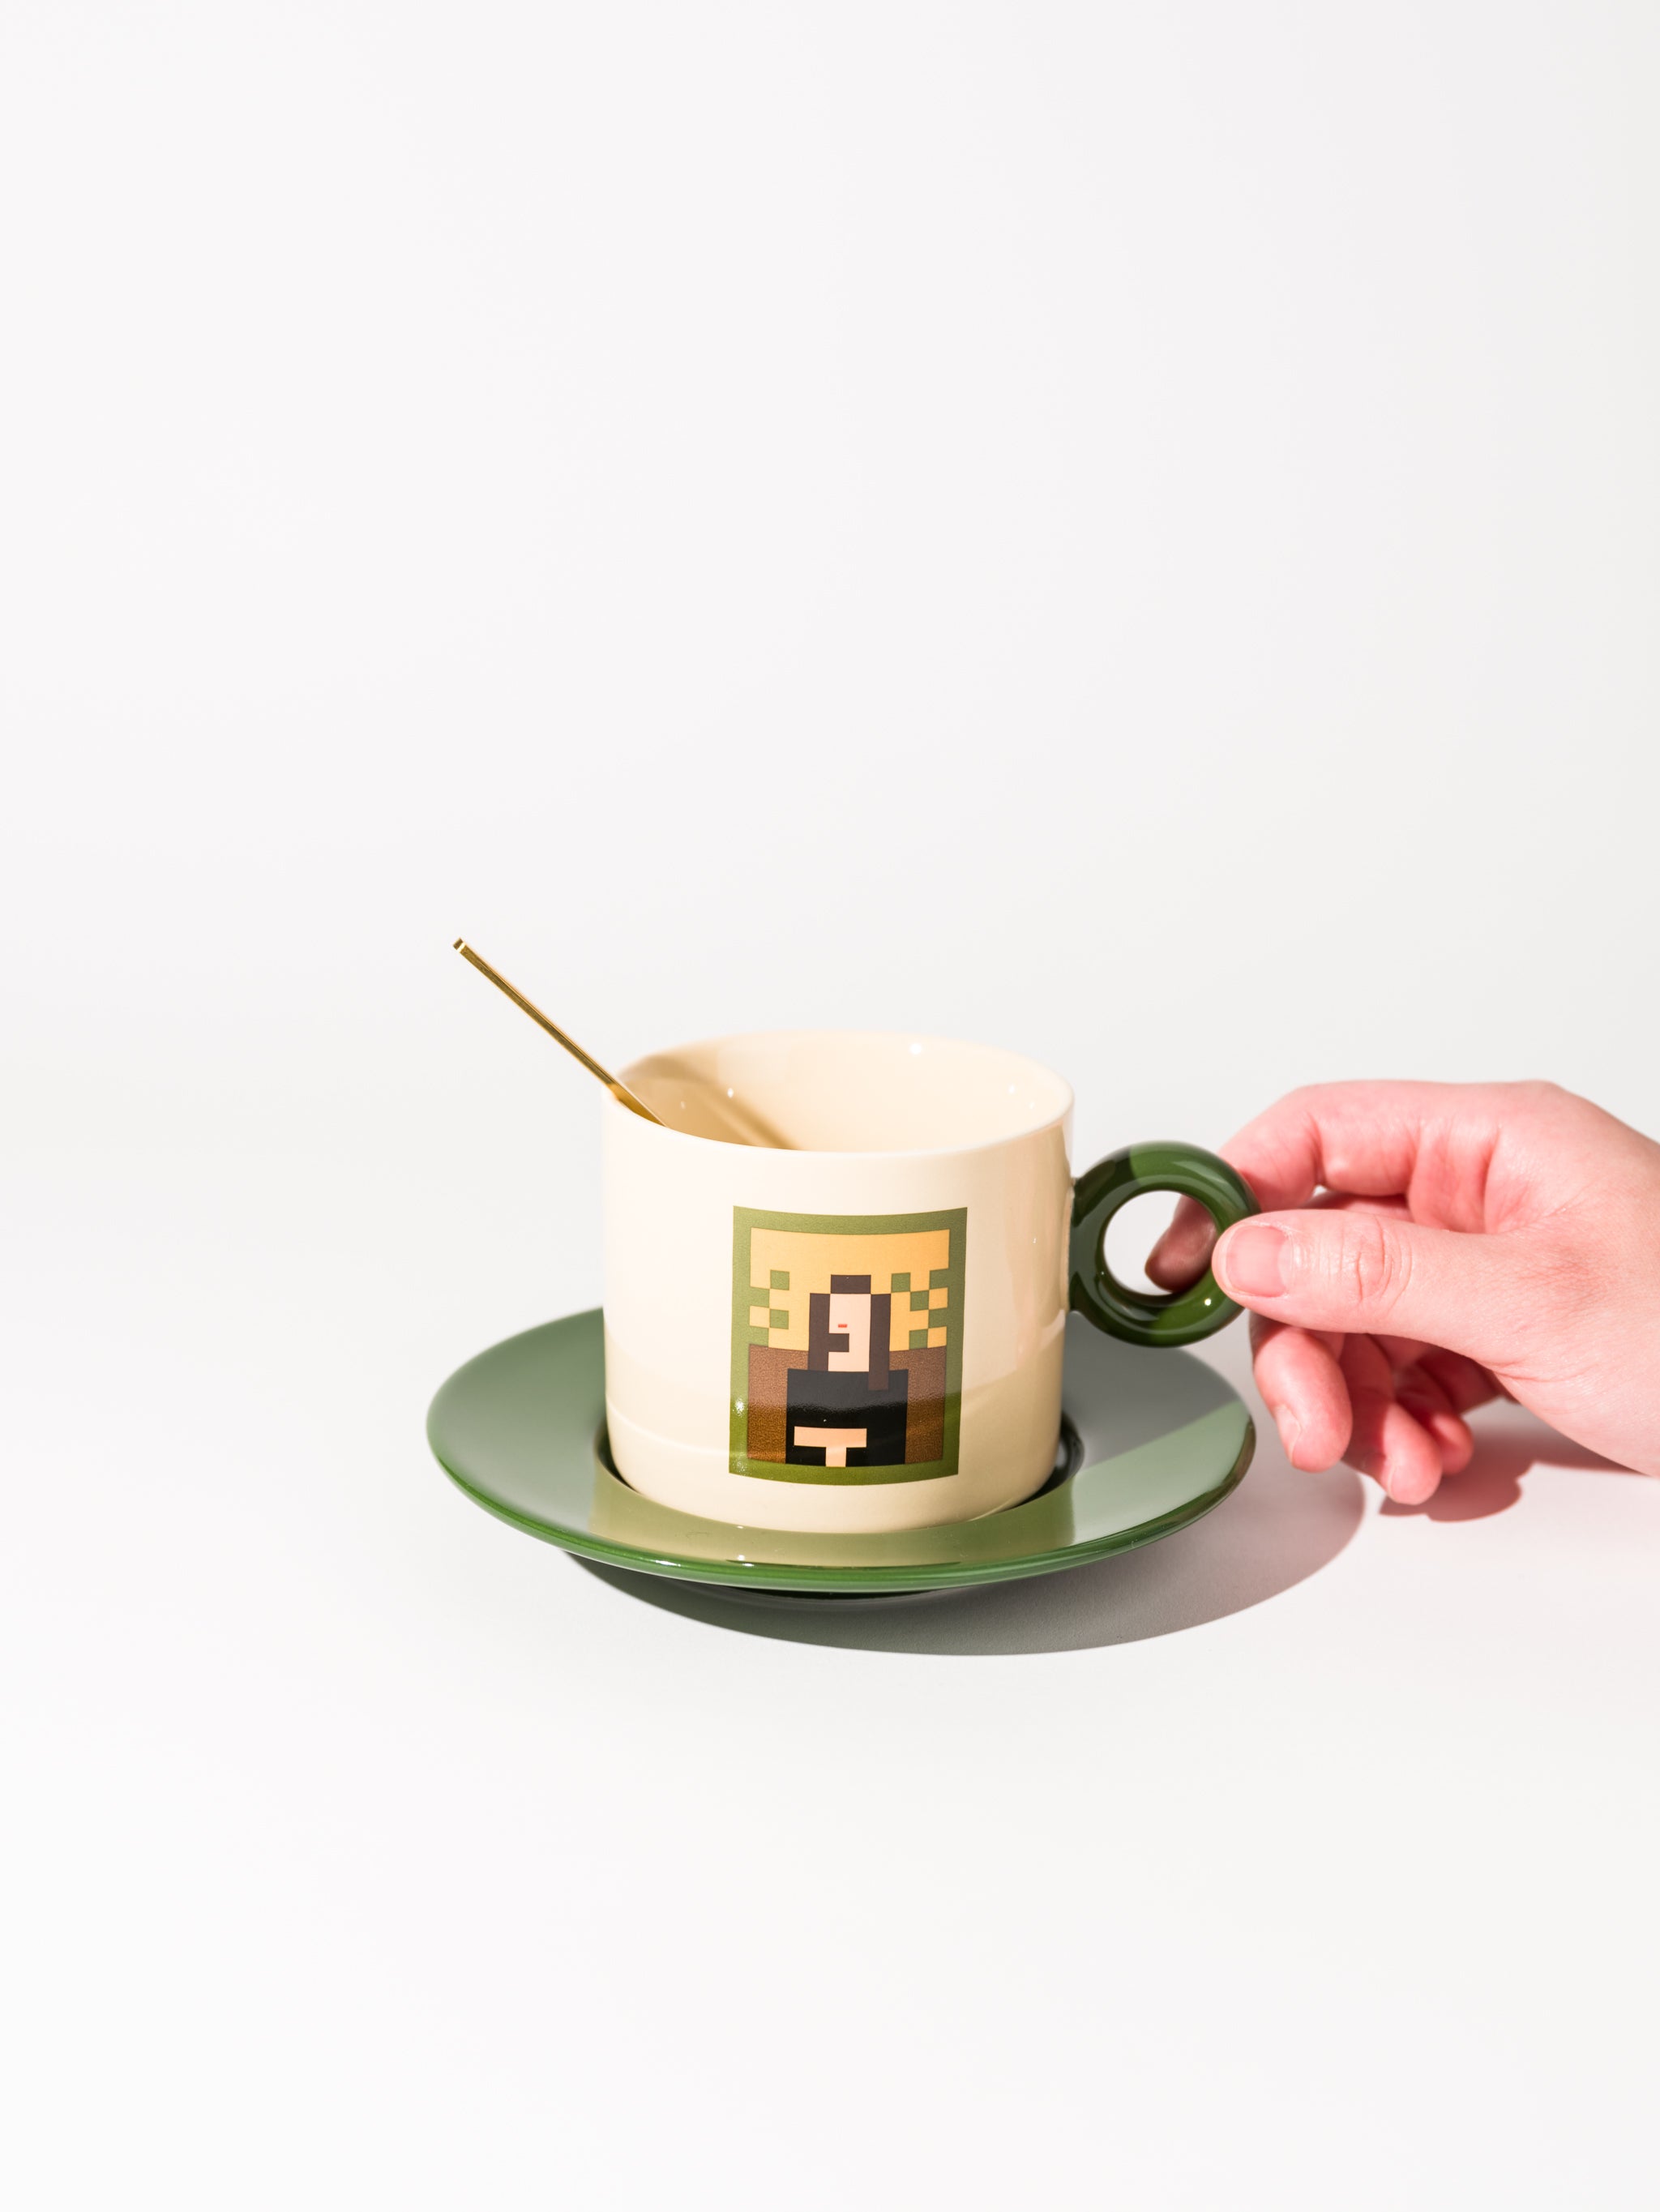 Mona Lisa Coffee Cup